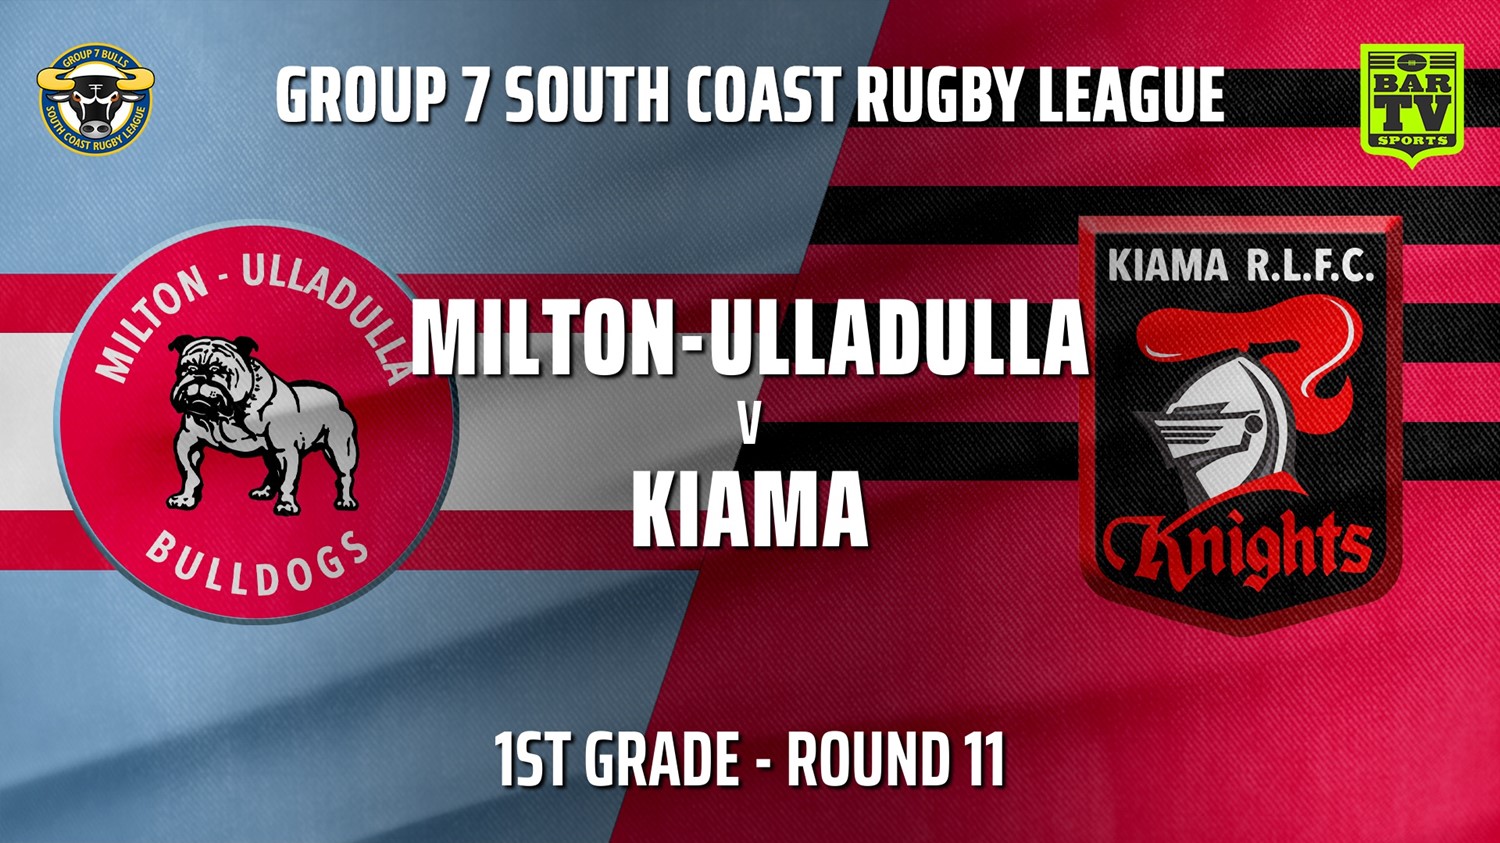 210626-South Coast Round 11 - 1st Grade - Milton-Ulladulla Bulldogs v Kiama Knights Slate Image